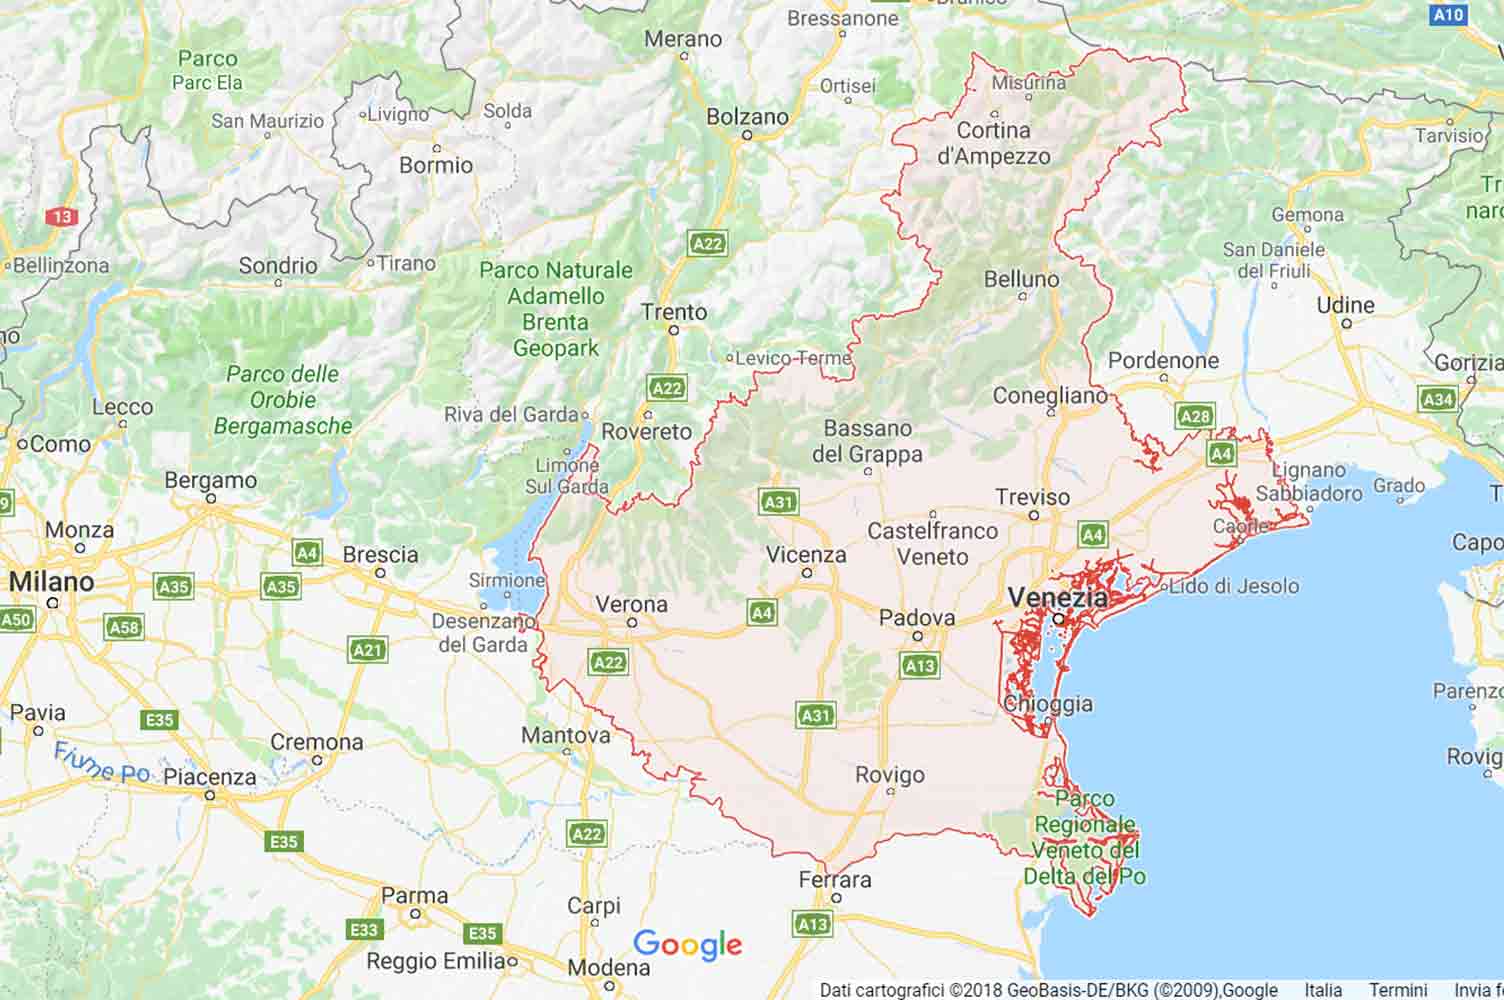 Veneto - Padova - Piazzola sul Brenta Preventivi Veloci google maps